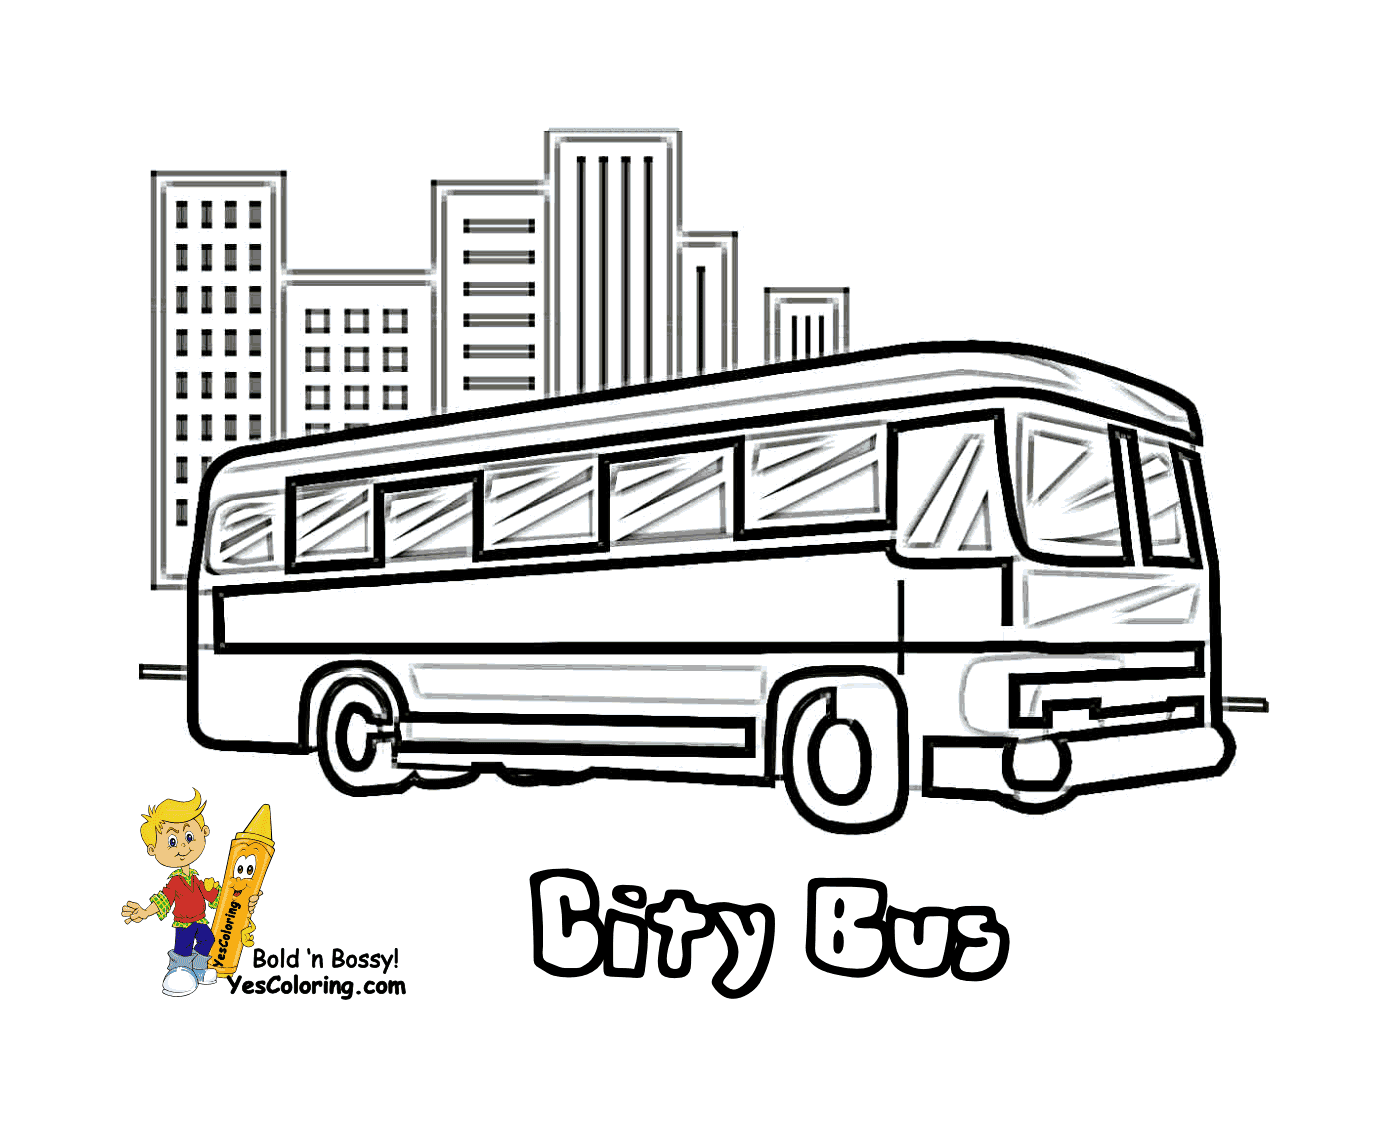   Un bus urbain circule en ville 